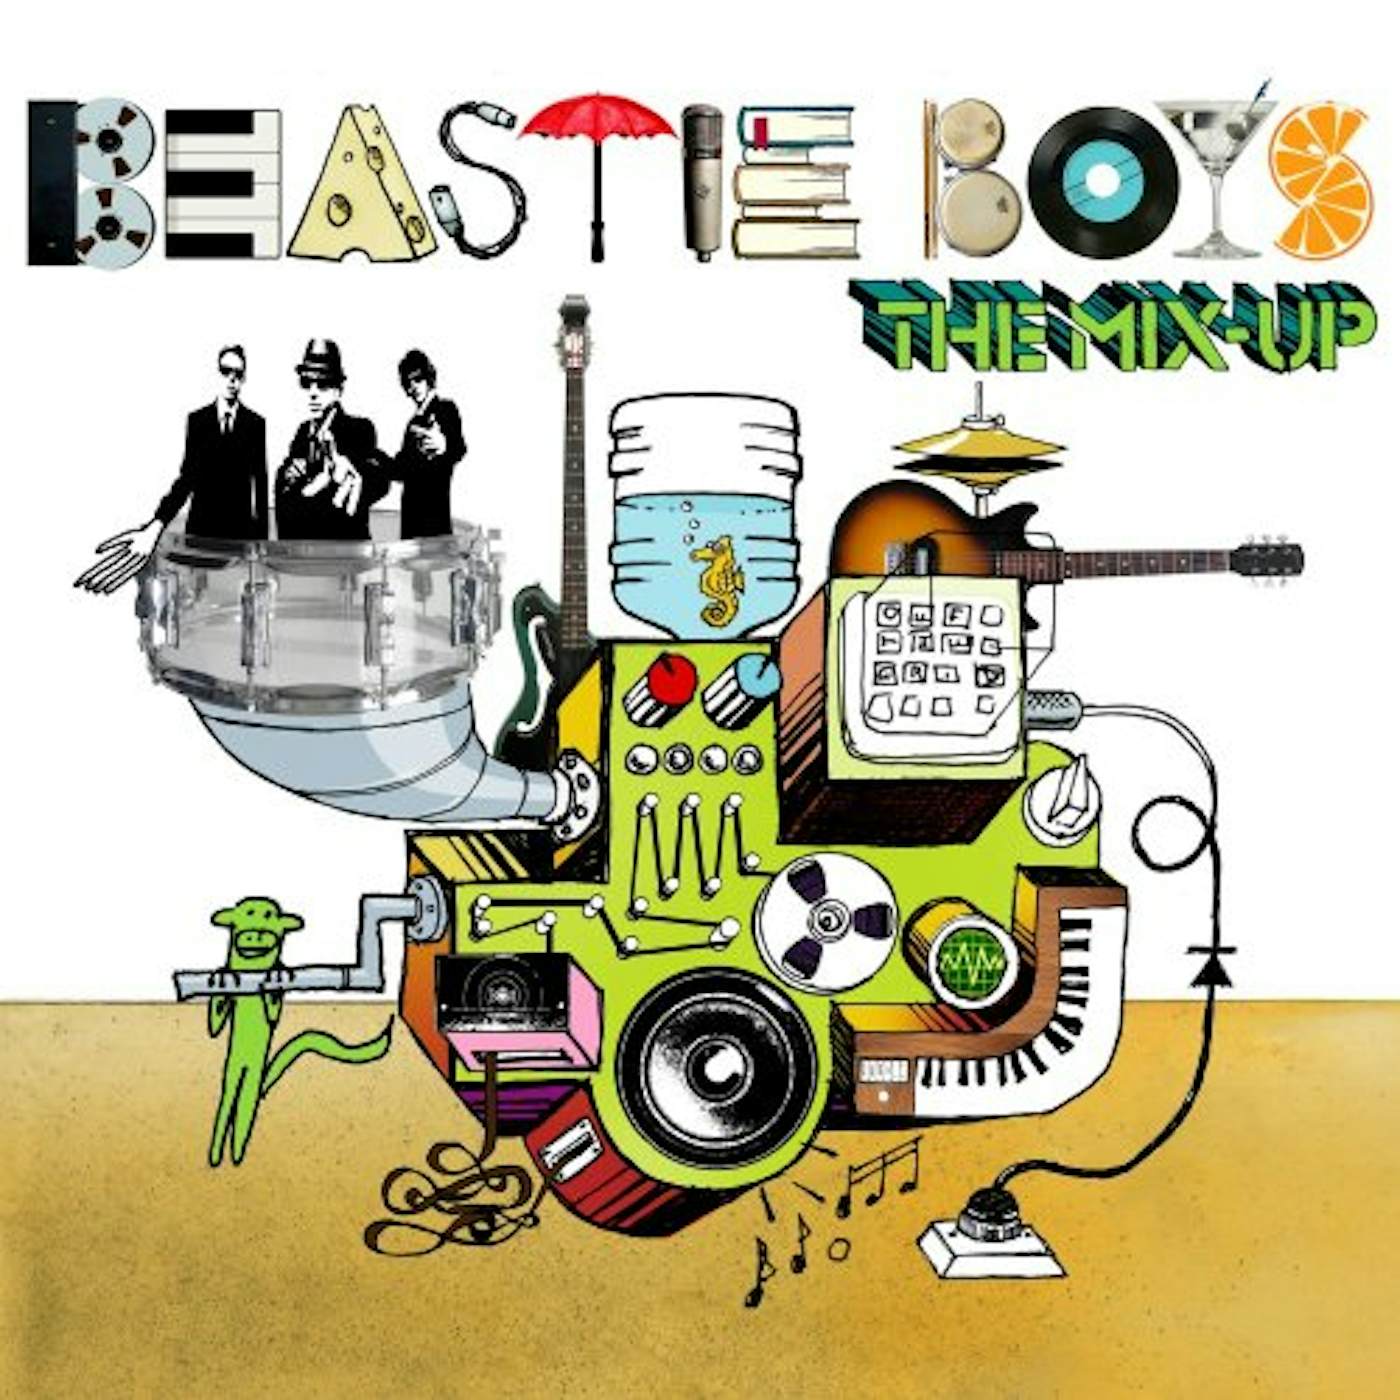 Beastie Boys MIX UP CD